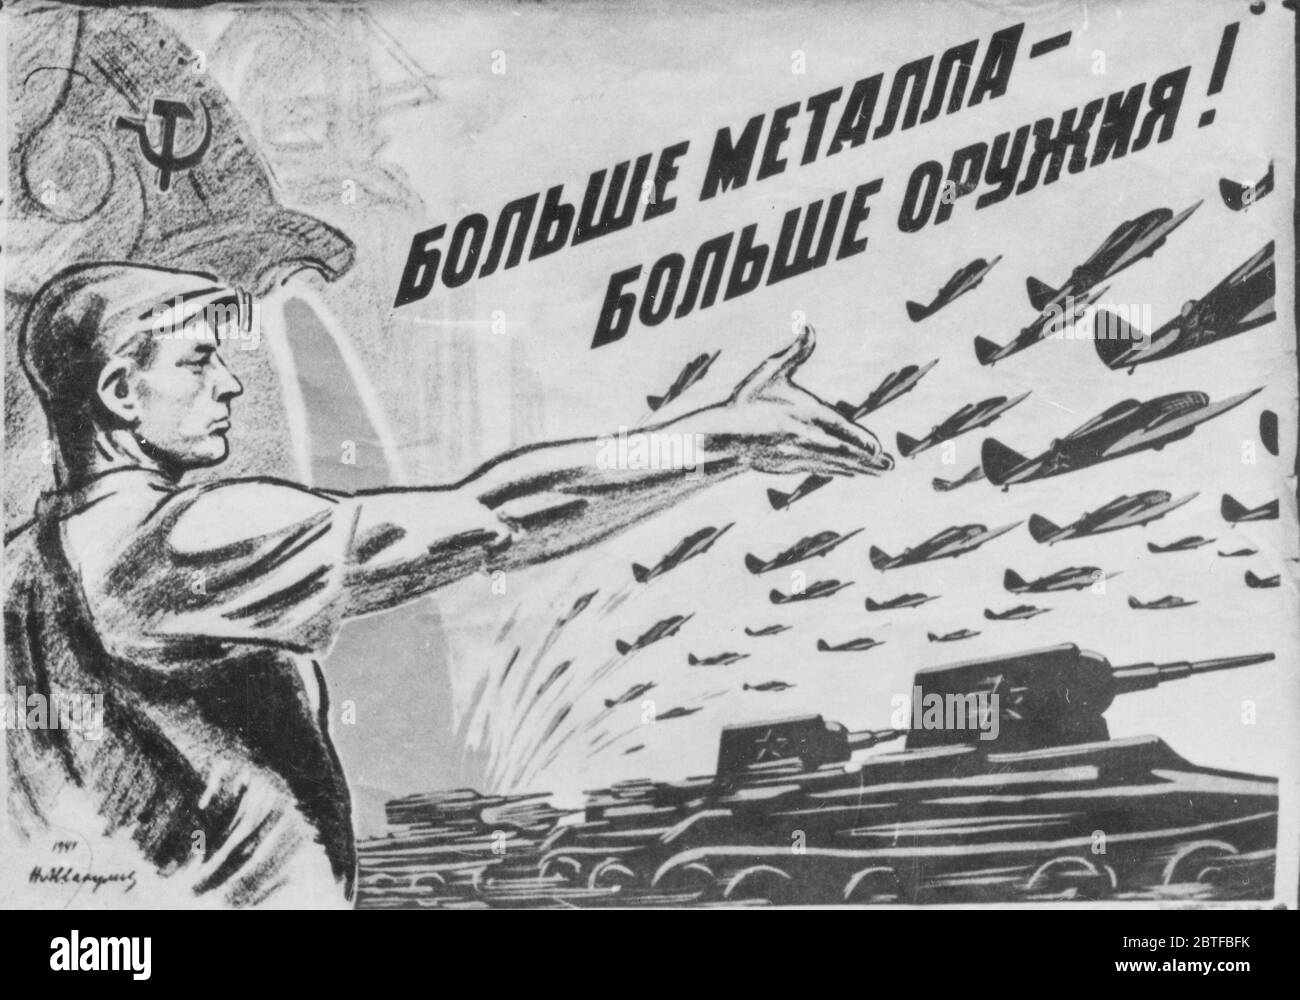 Soviet propaganda poster Operation Barbarossa - German Invasion of Russia, 1941 - 15th Infantary Division of the Thuringia-Kurhessen Division Stock Photo